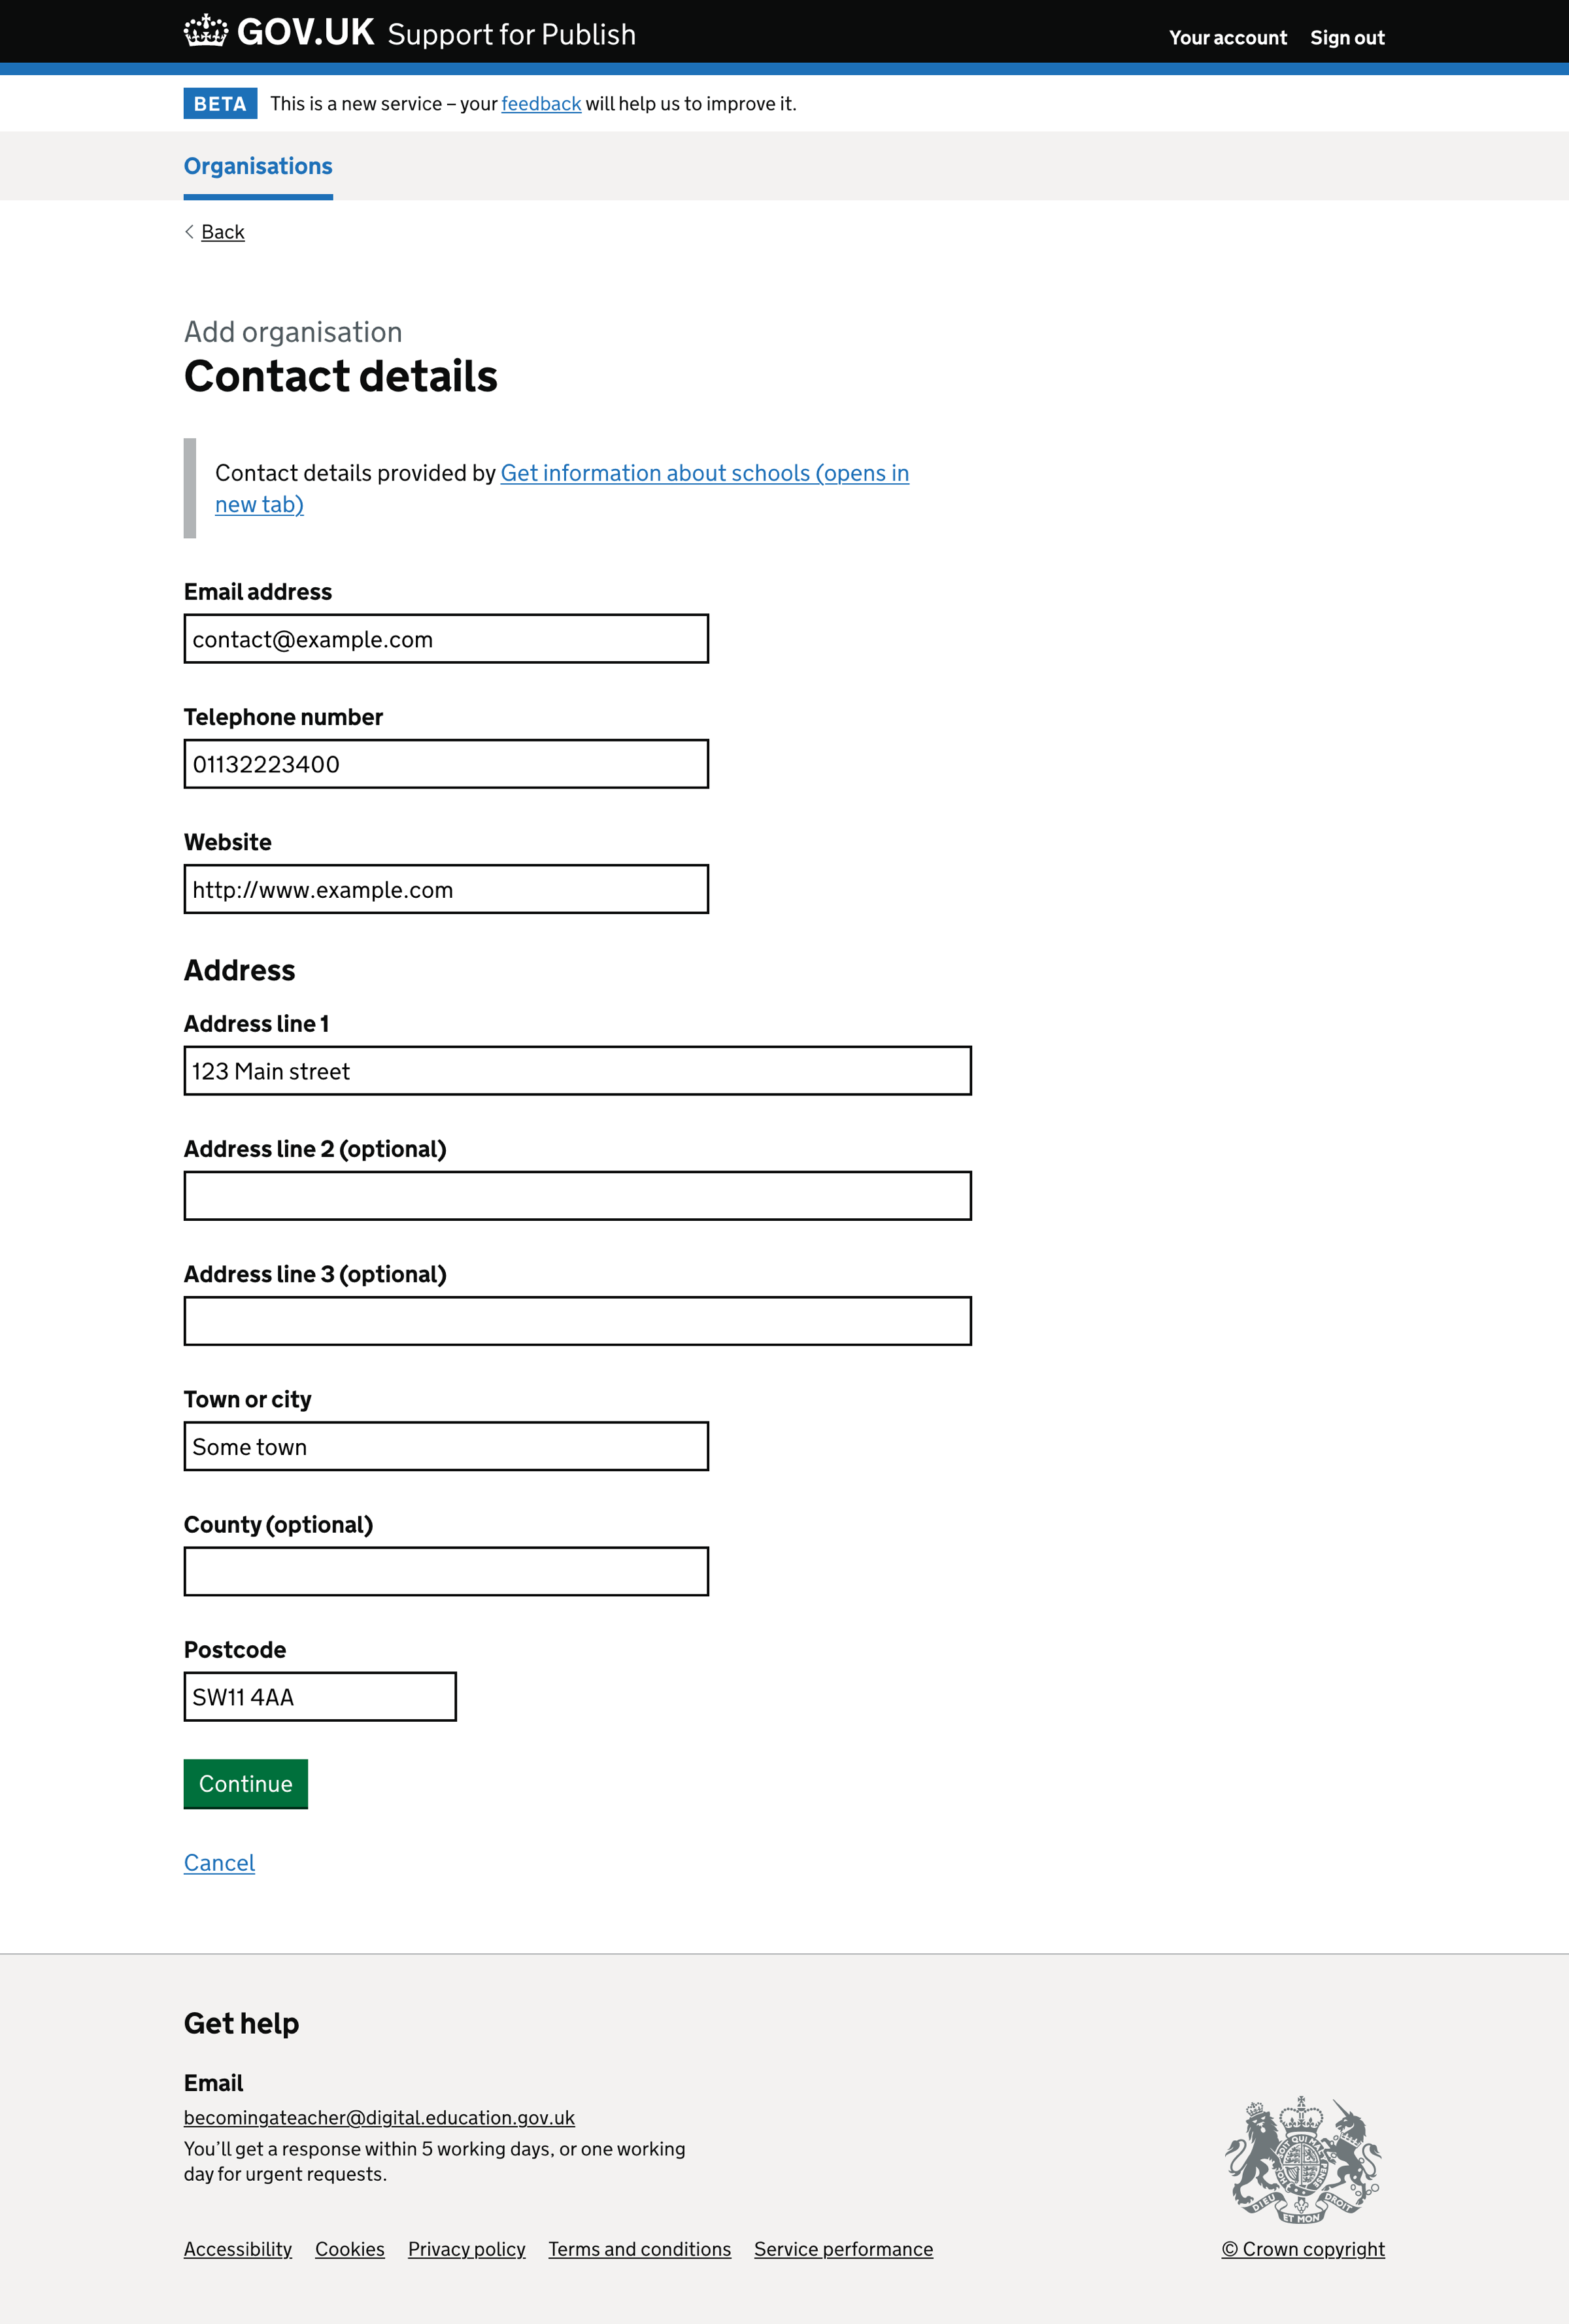 Screenshot of Add organisation contact details (school)